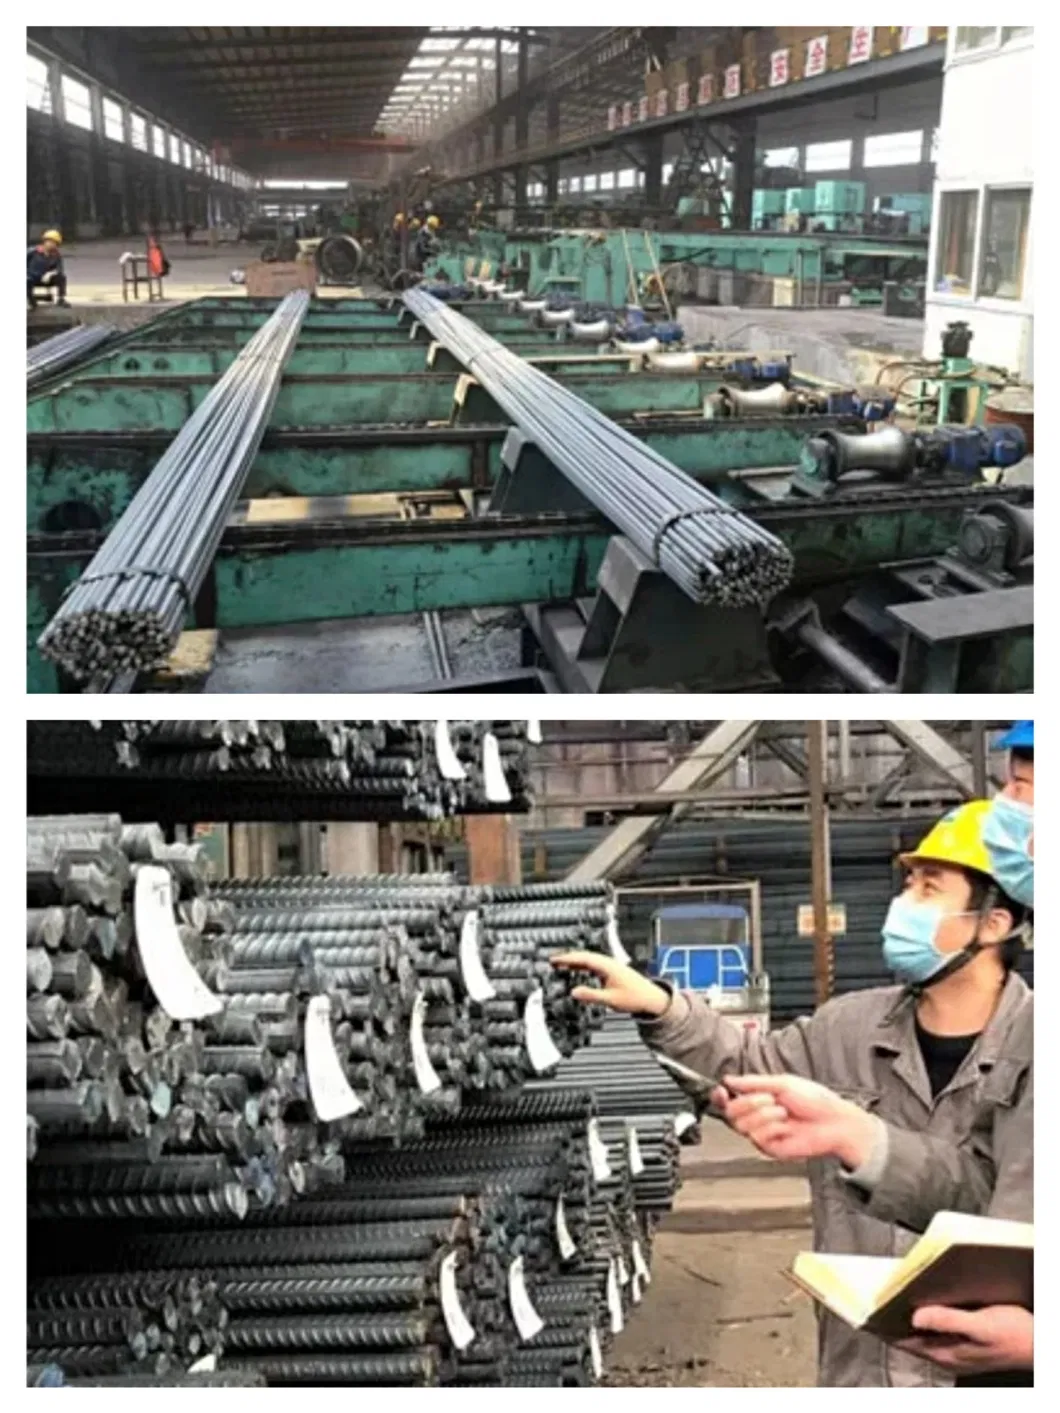 Hot Sales 10-13mm Steel Rebar Per Ton Bars Price Steel Construction Iron Rods